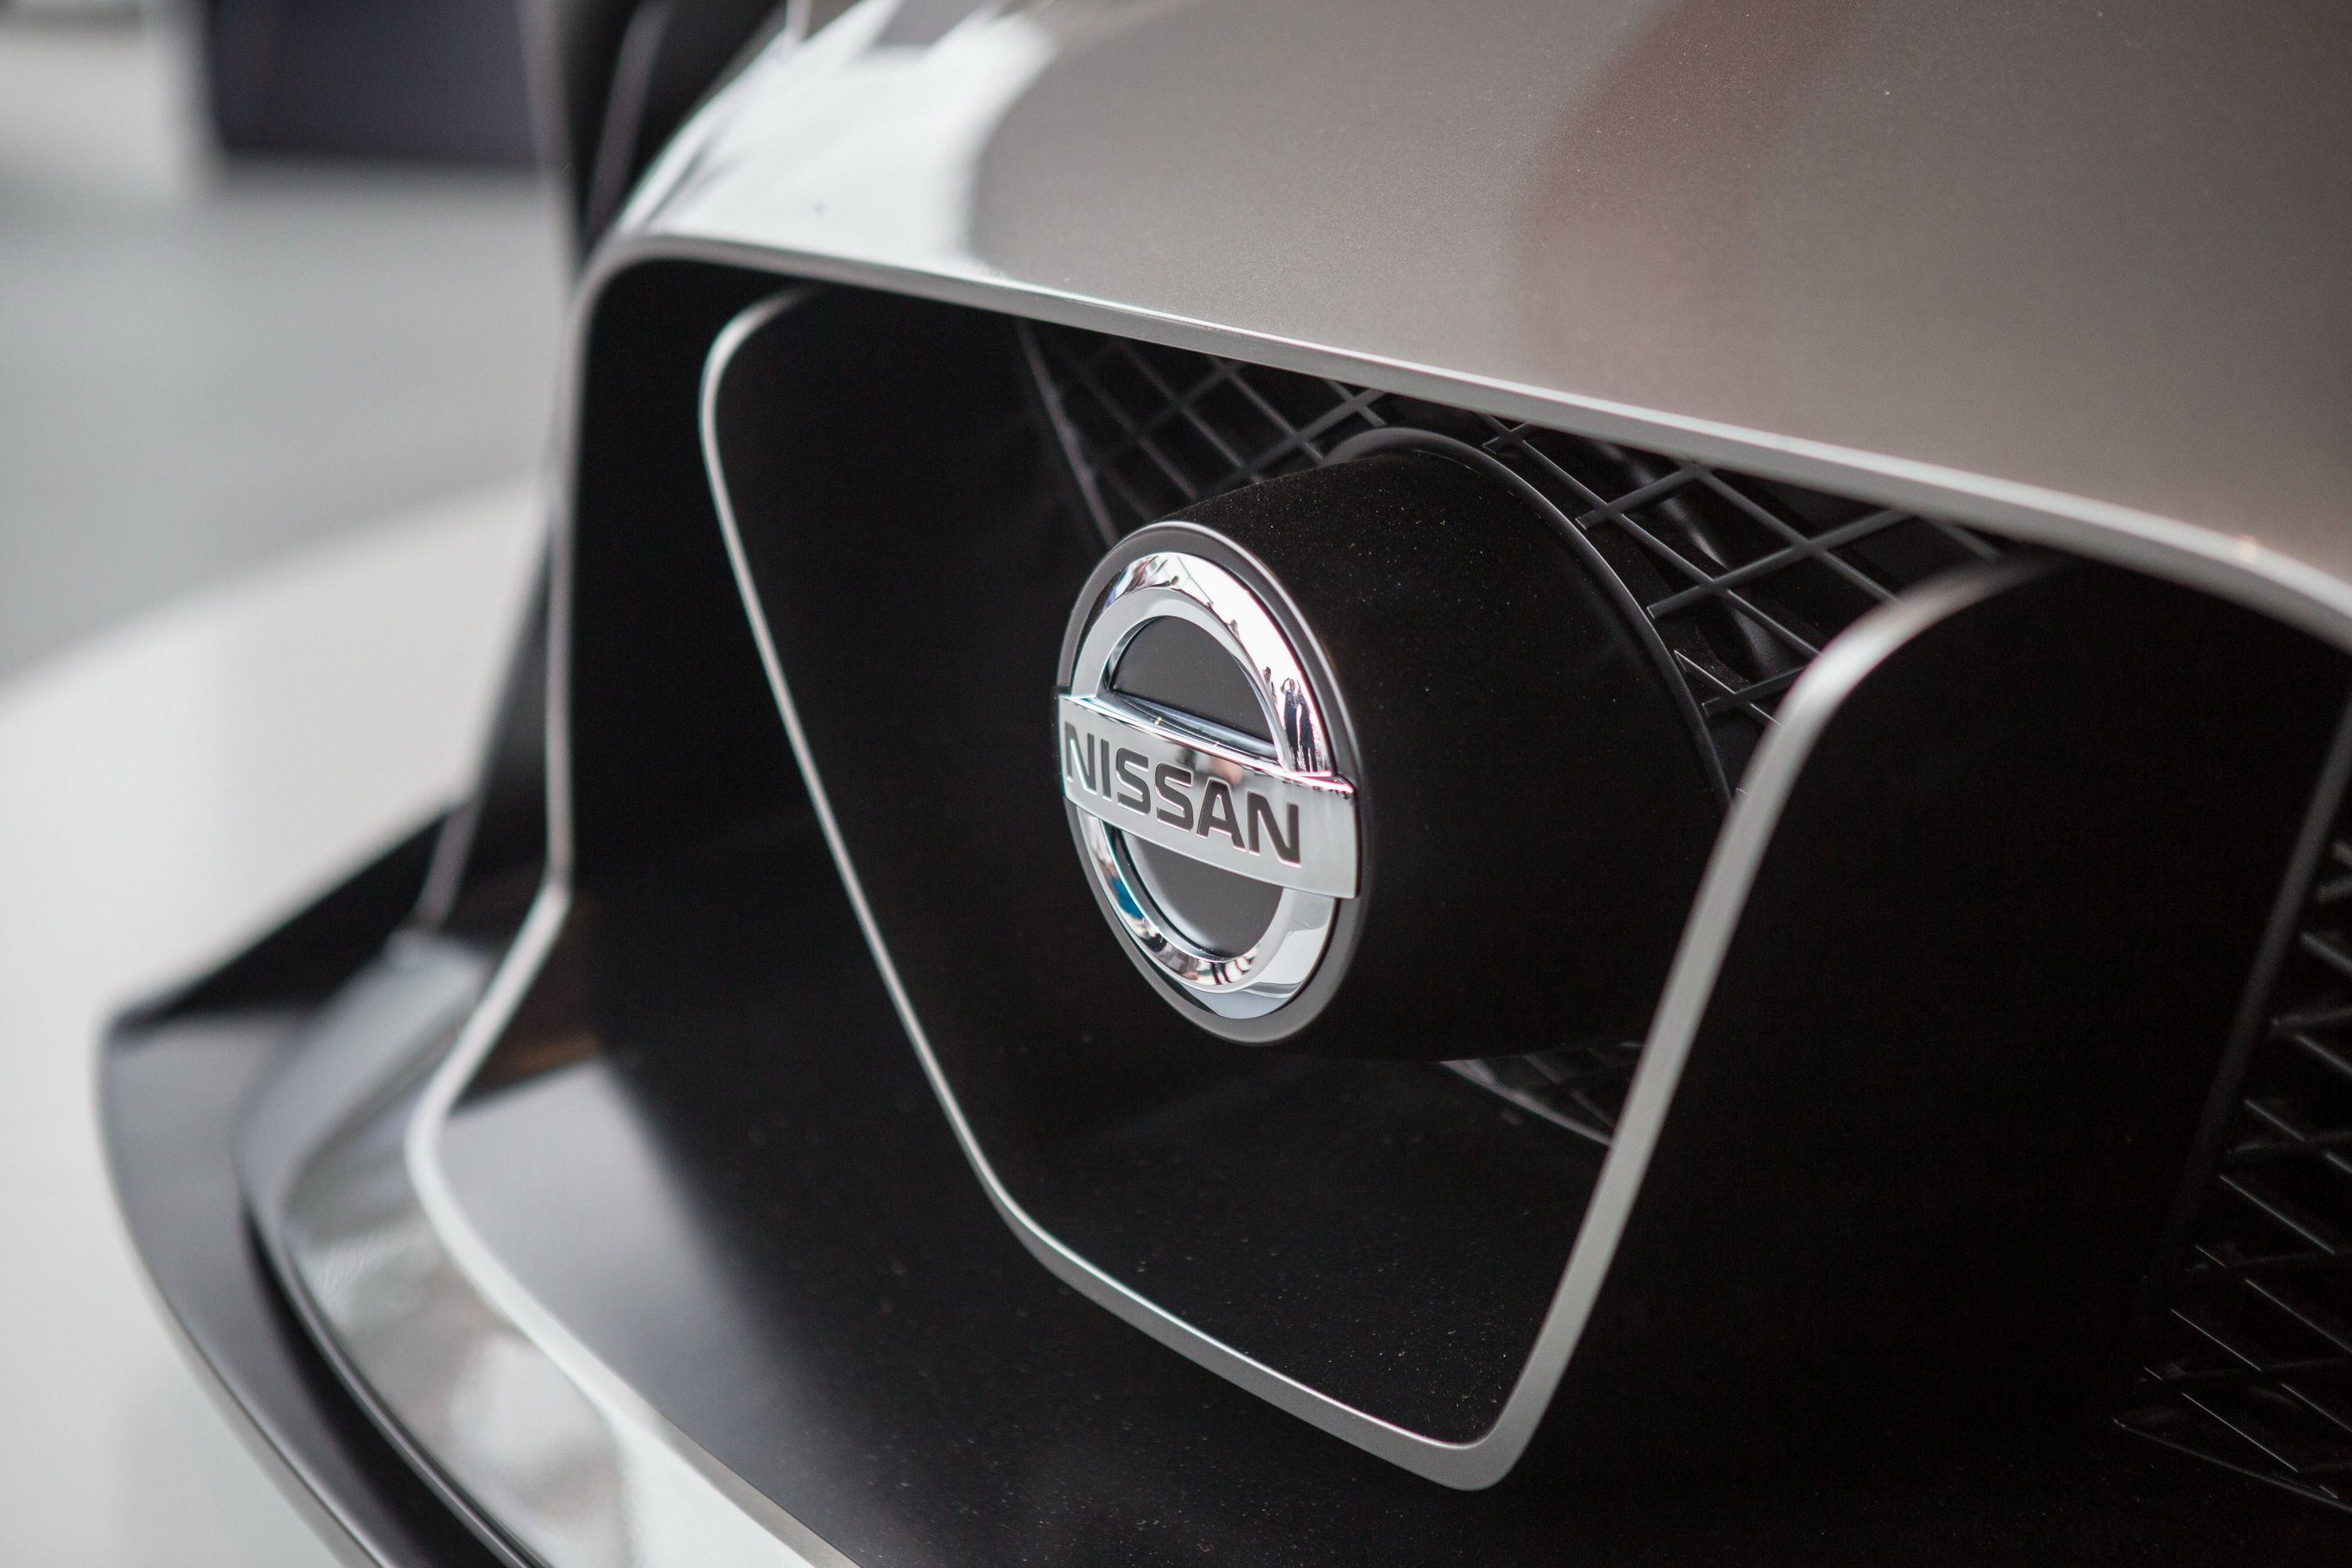 2014 Nissan Concept 2020 Vision Gran Turismo